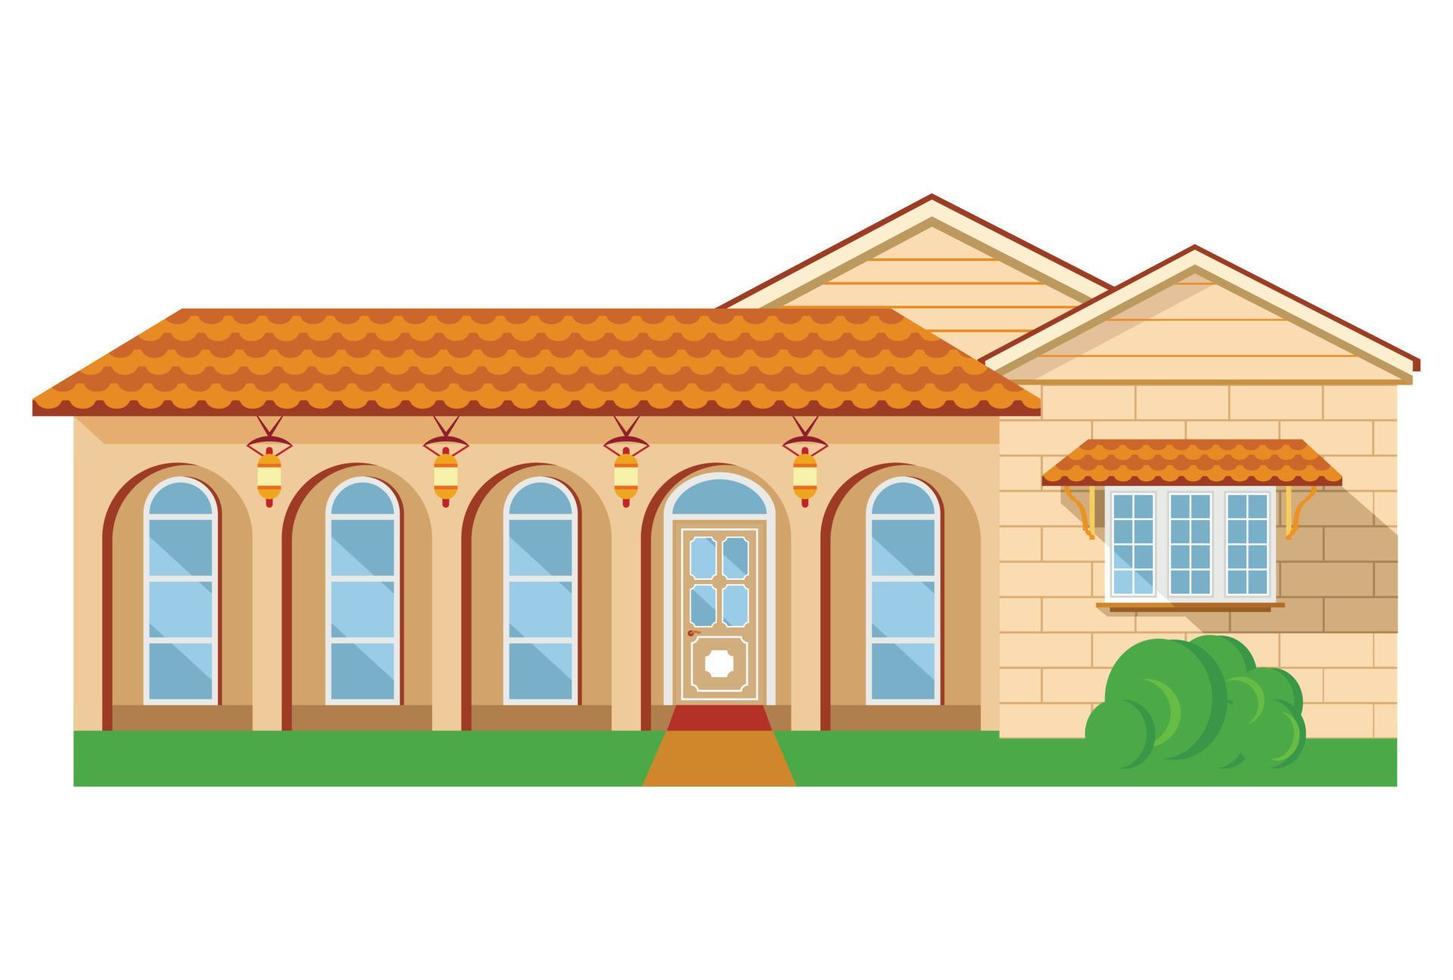 New house illustration vector